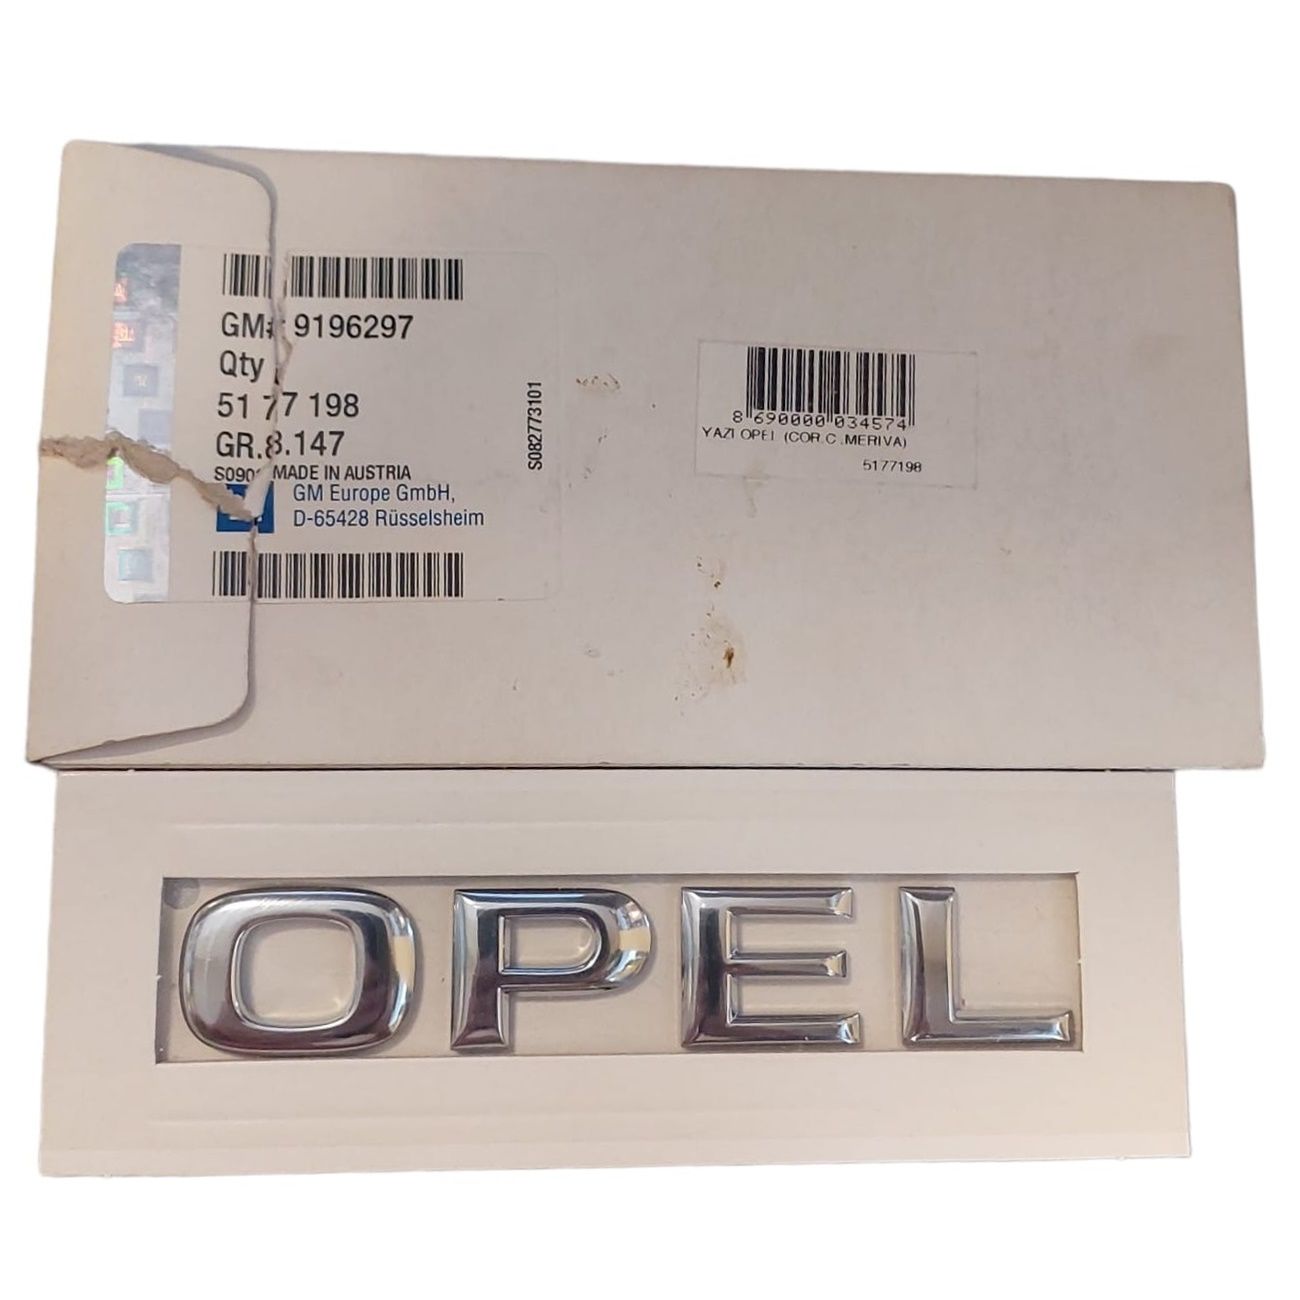 Opel Meriva A '' OPEL '' Bagaj Yazısı Orijinal GM